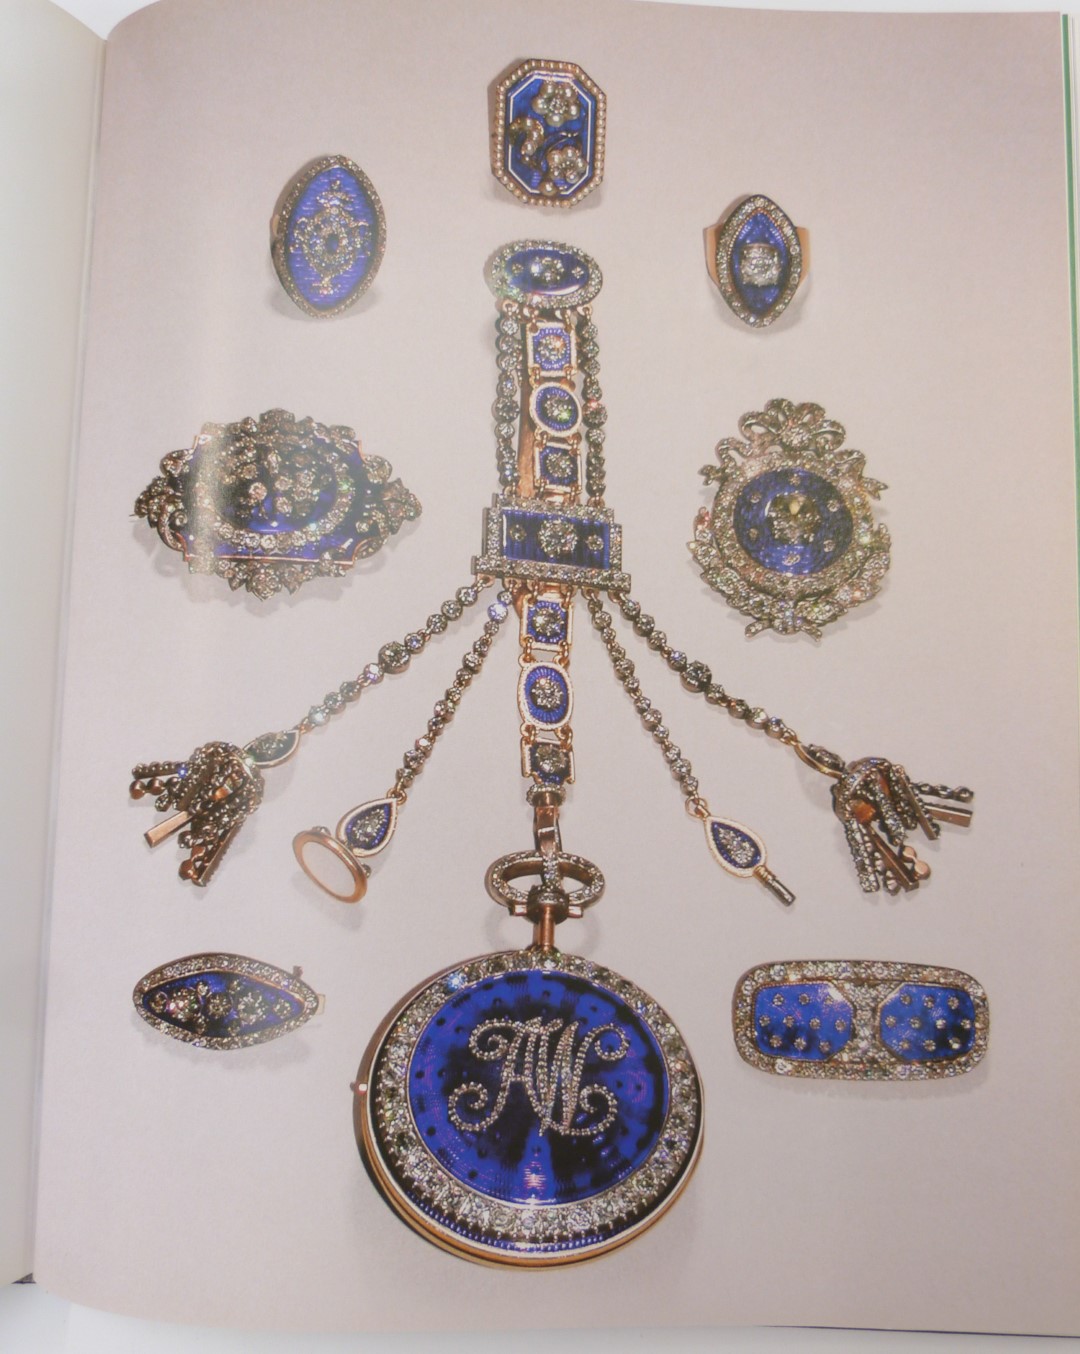 Georgian Jewellery 1714-1830, Ginny Redington Dawes with Olivia Collings, 2007 edition - Image 3 of 6